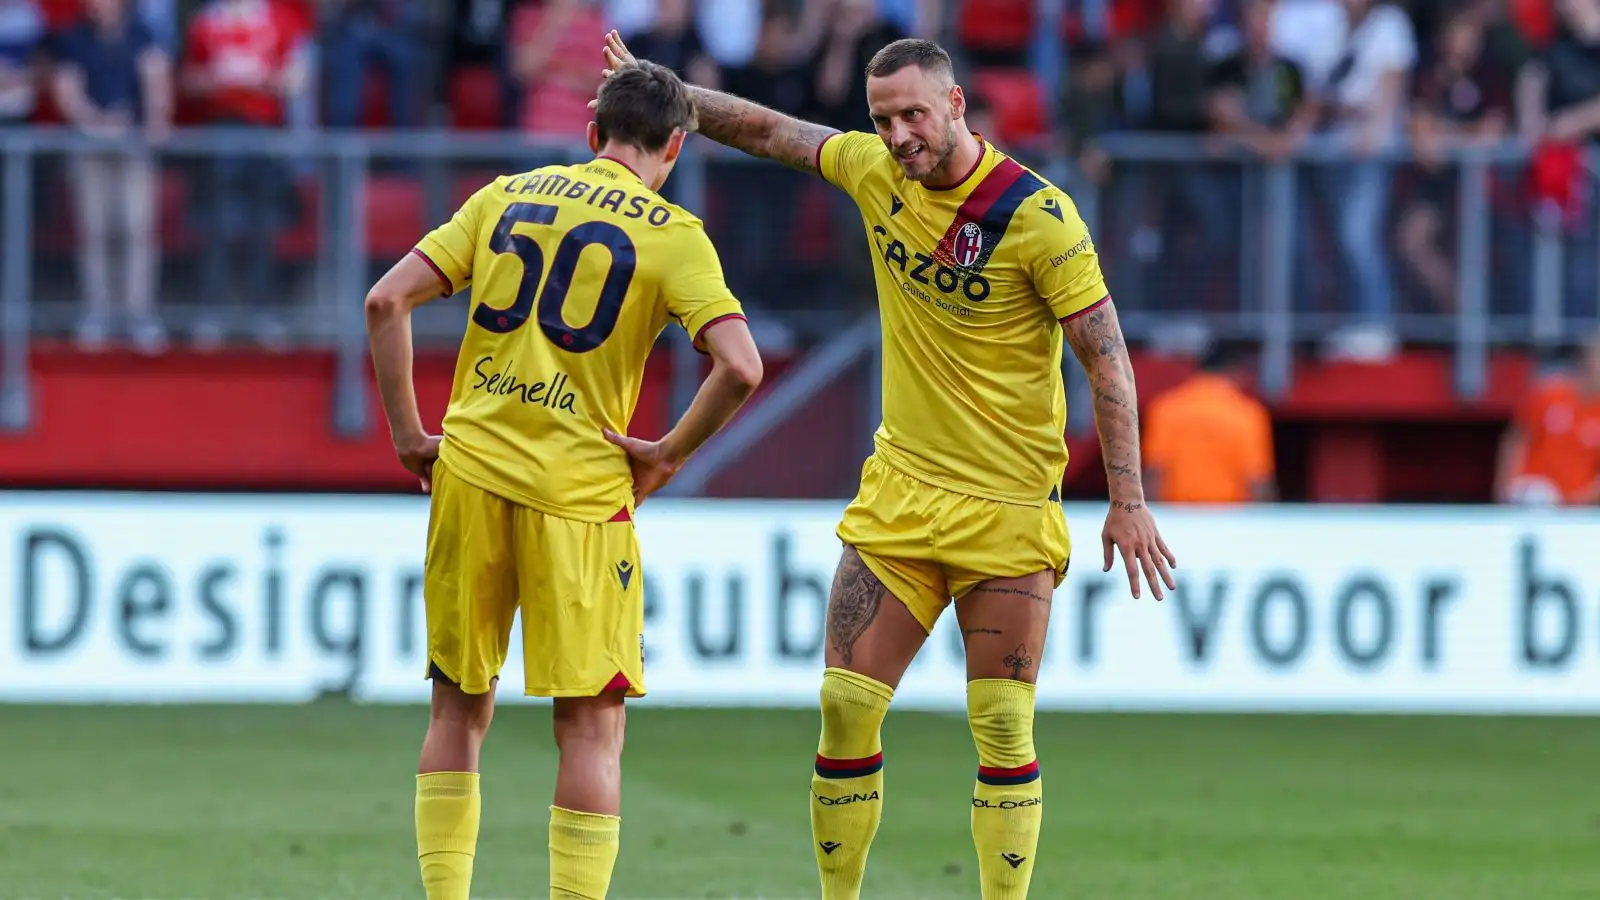 Man Utd target Marko Arnautovic points instructions to his team-mates